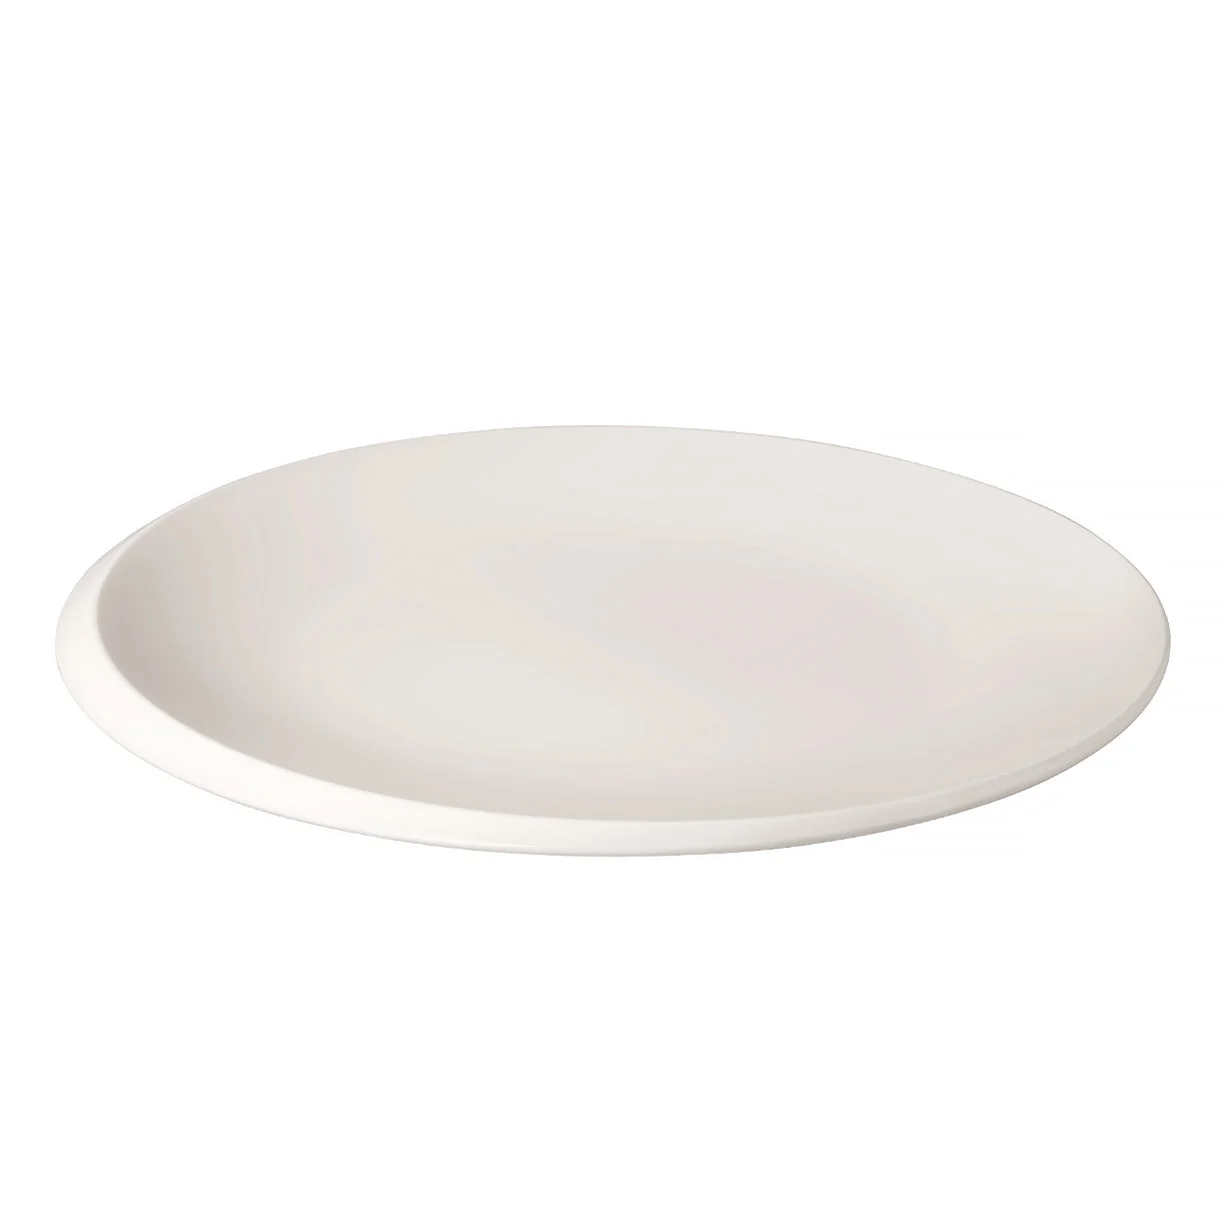 NewMoon Плоская тарелка 27 см